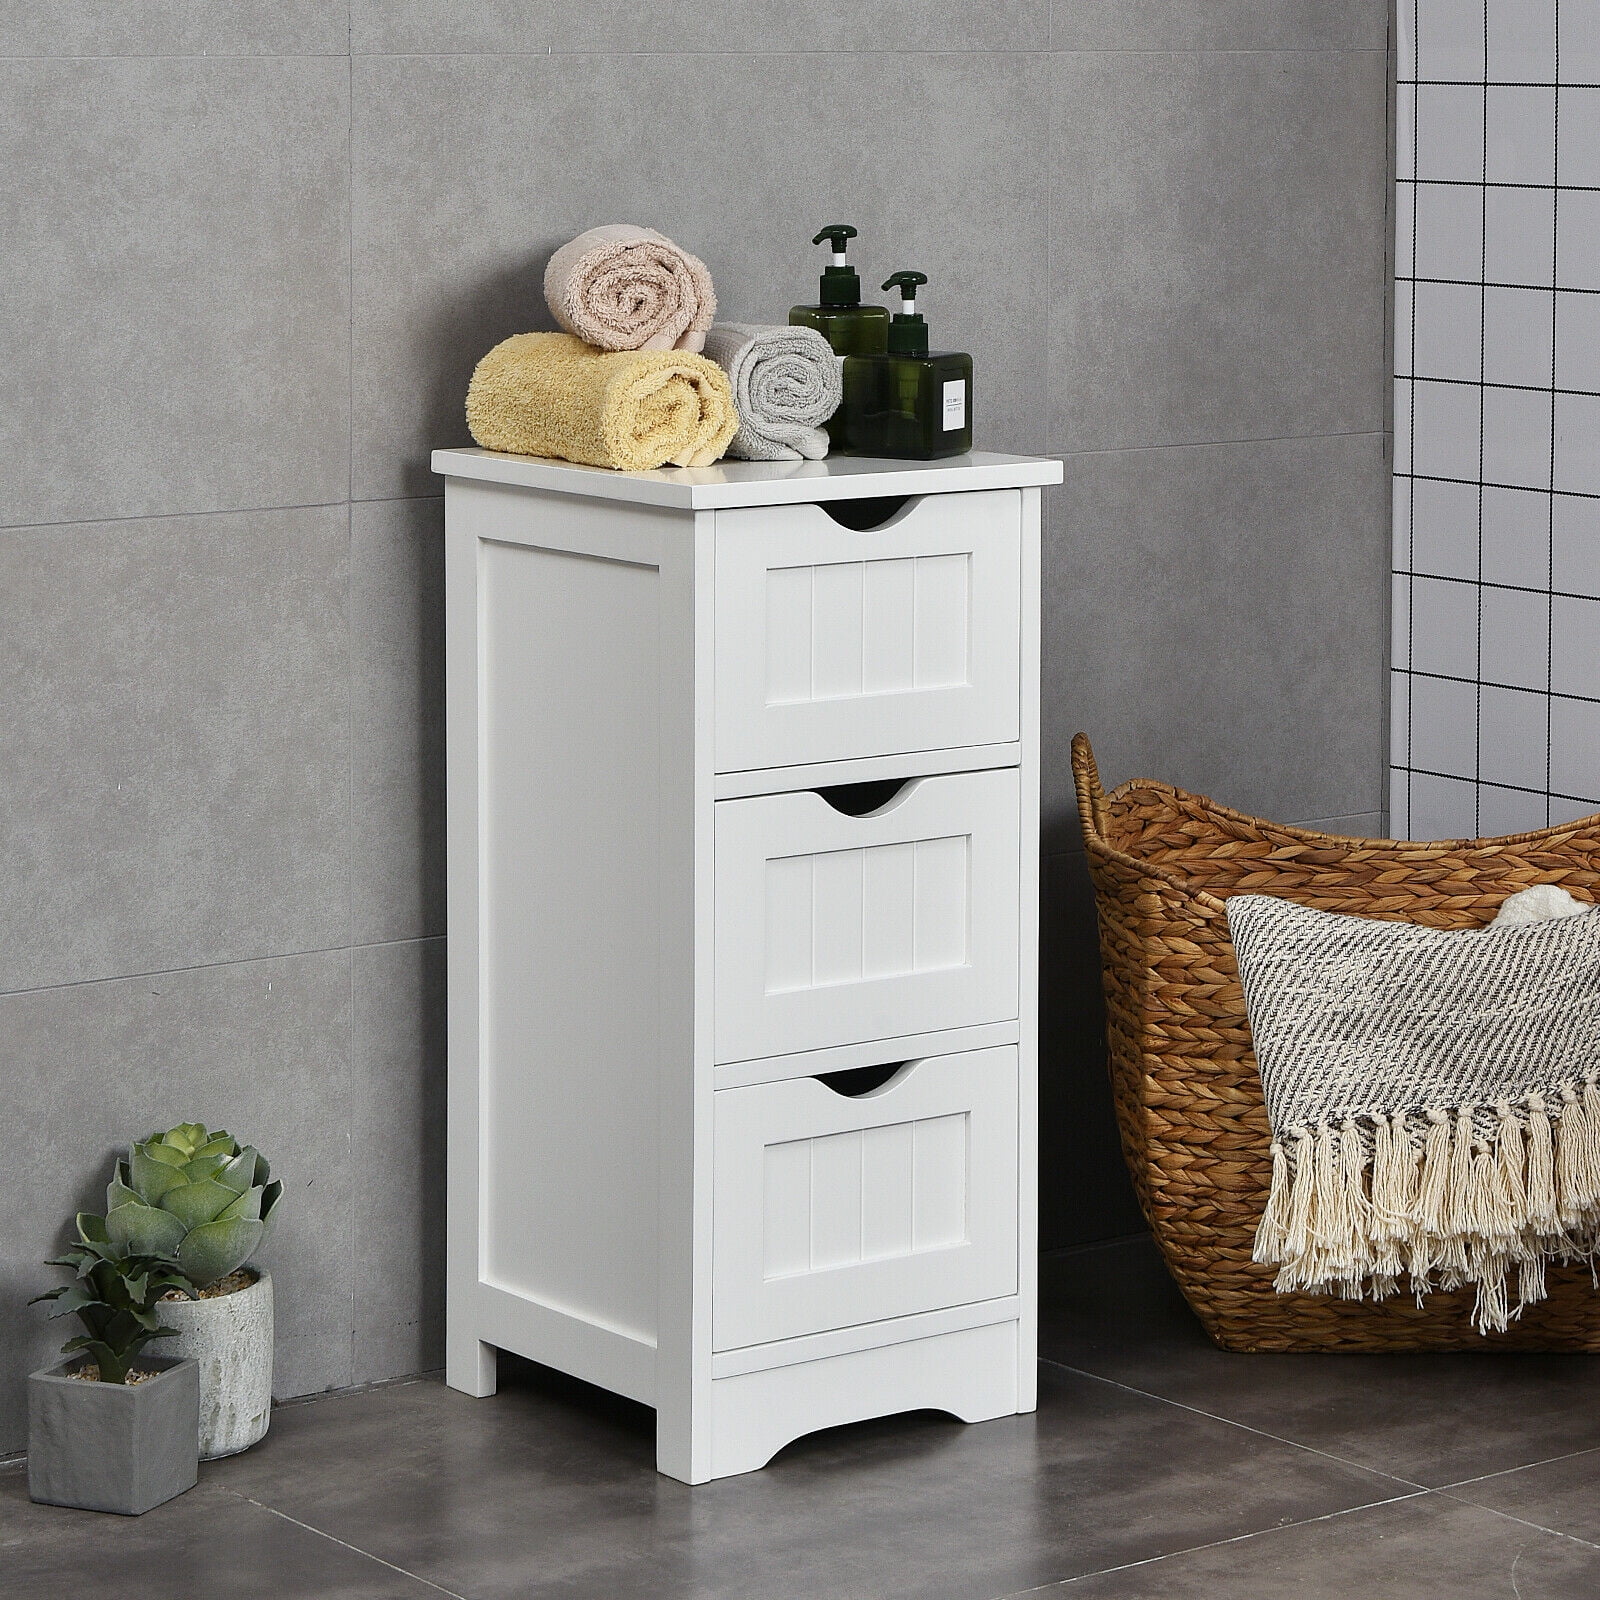 3-Drawers Bathroom Floor Cabinet in White – Walmart Inventory Checker –  BrickSeek